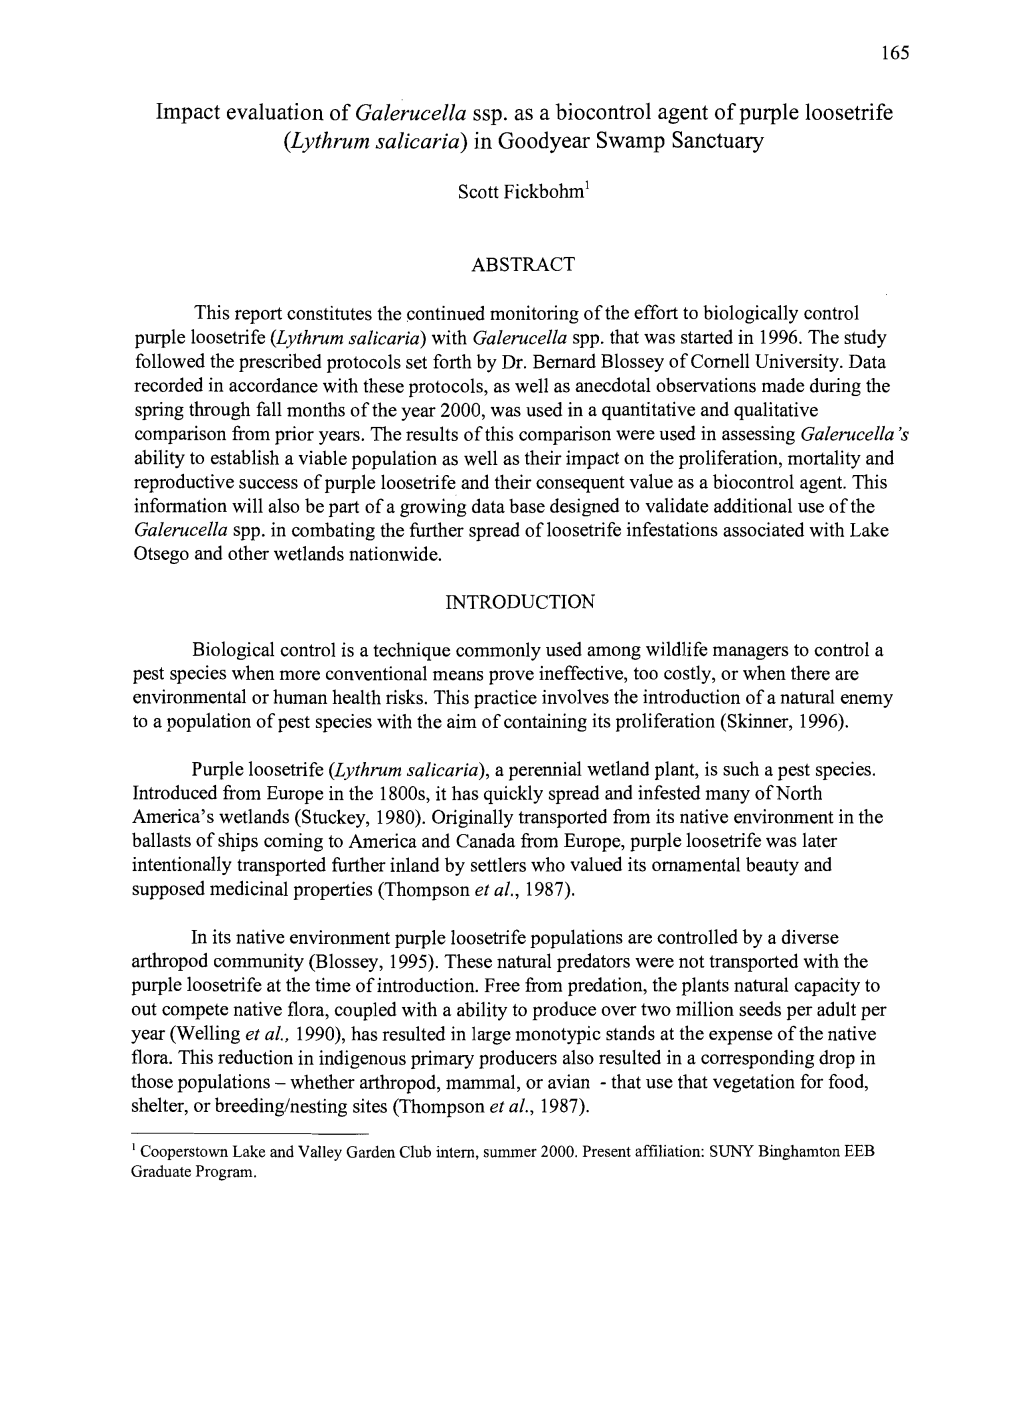 Impact Evaluation of Galerucella Ssp. As a Biocontrol Agent Ofpurple Loosetrife (Lythrum Salicaria) in Goodyear Swamp Sanctuary